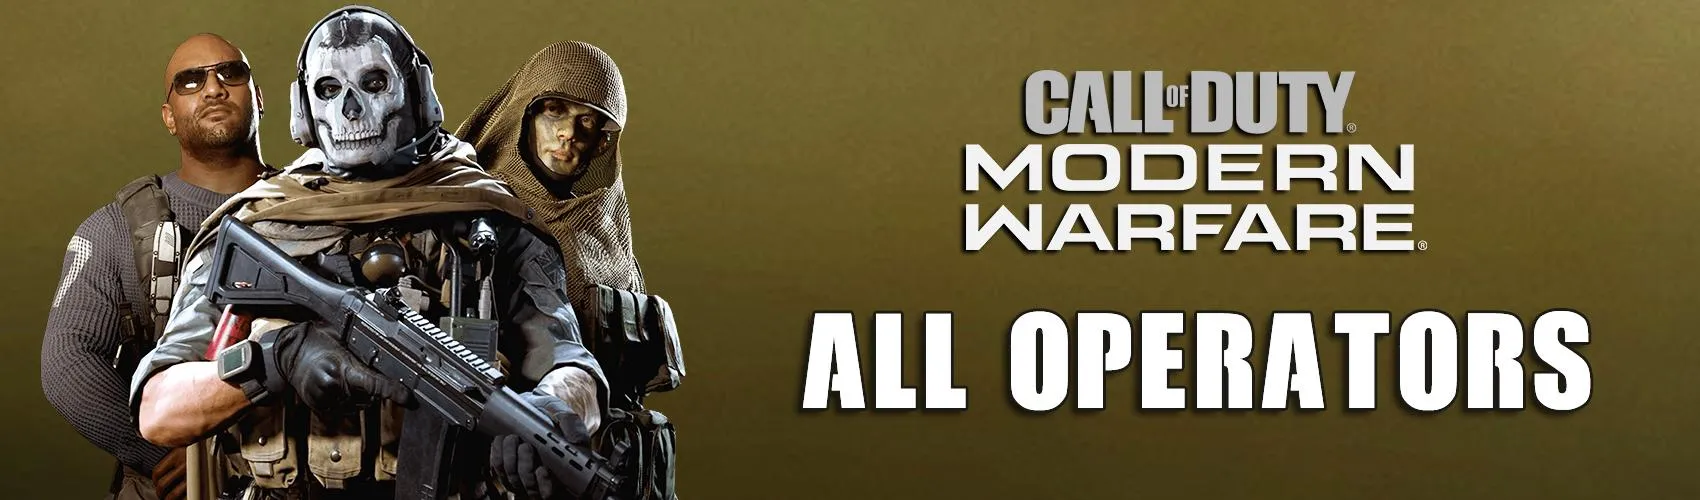 All Operators in Call of Duty: Modern Warfare